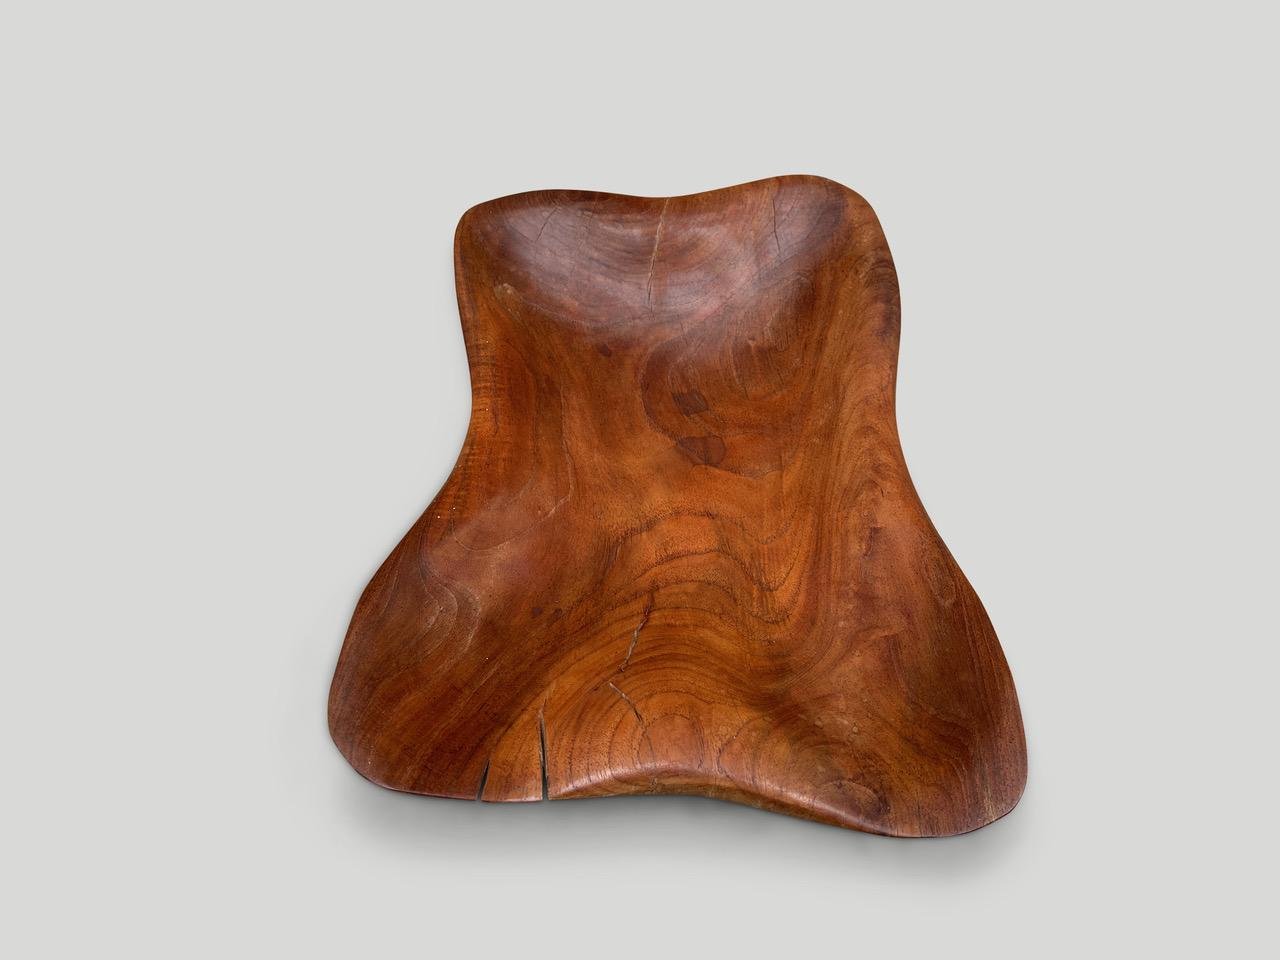 Organic Modern Andrianna Shamaris Minimalist Teak Wood Sculptural Bowl For Sale